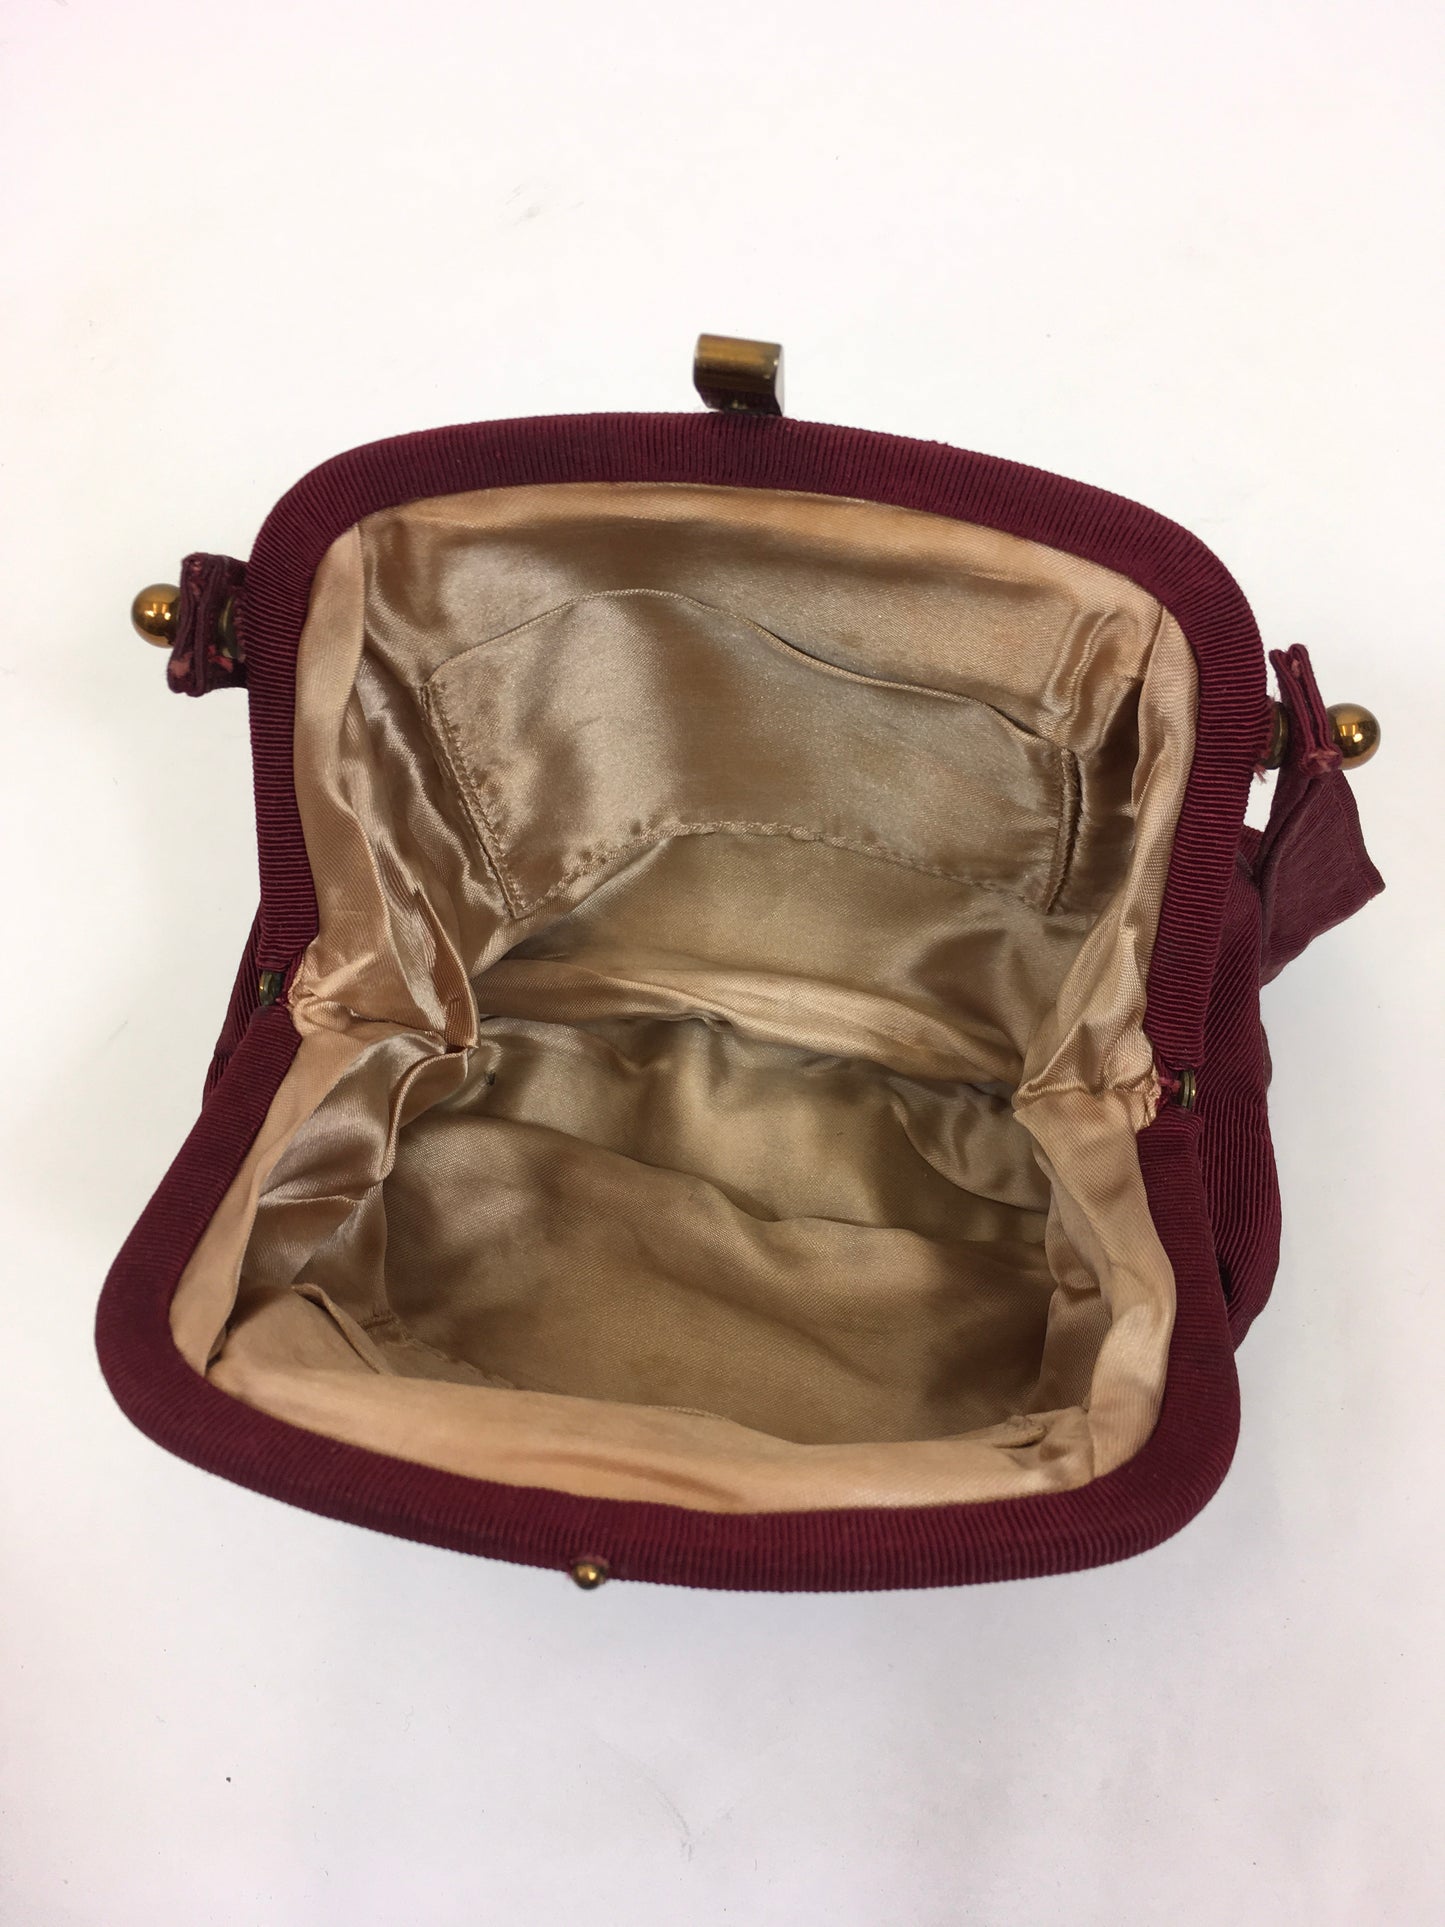 Original 1940's Stunning Grosgrain Handbag - In A Warm Winter Berry